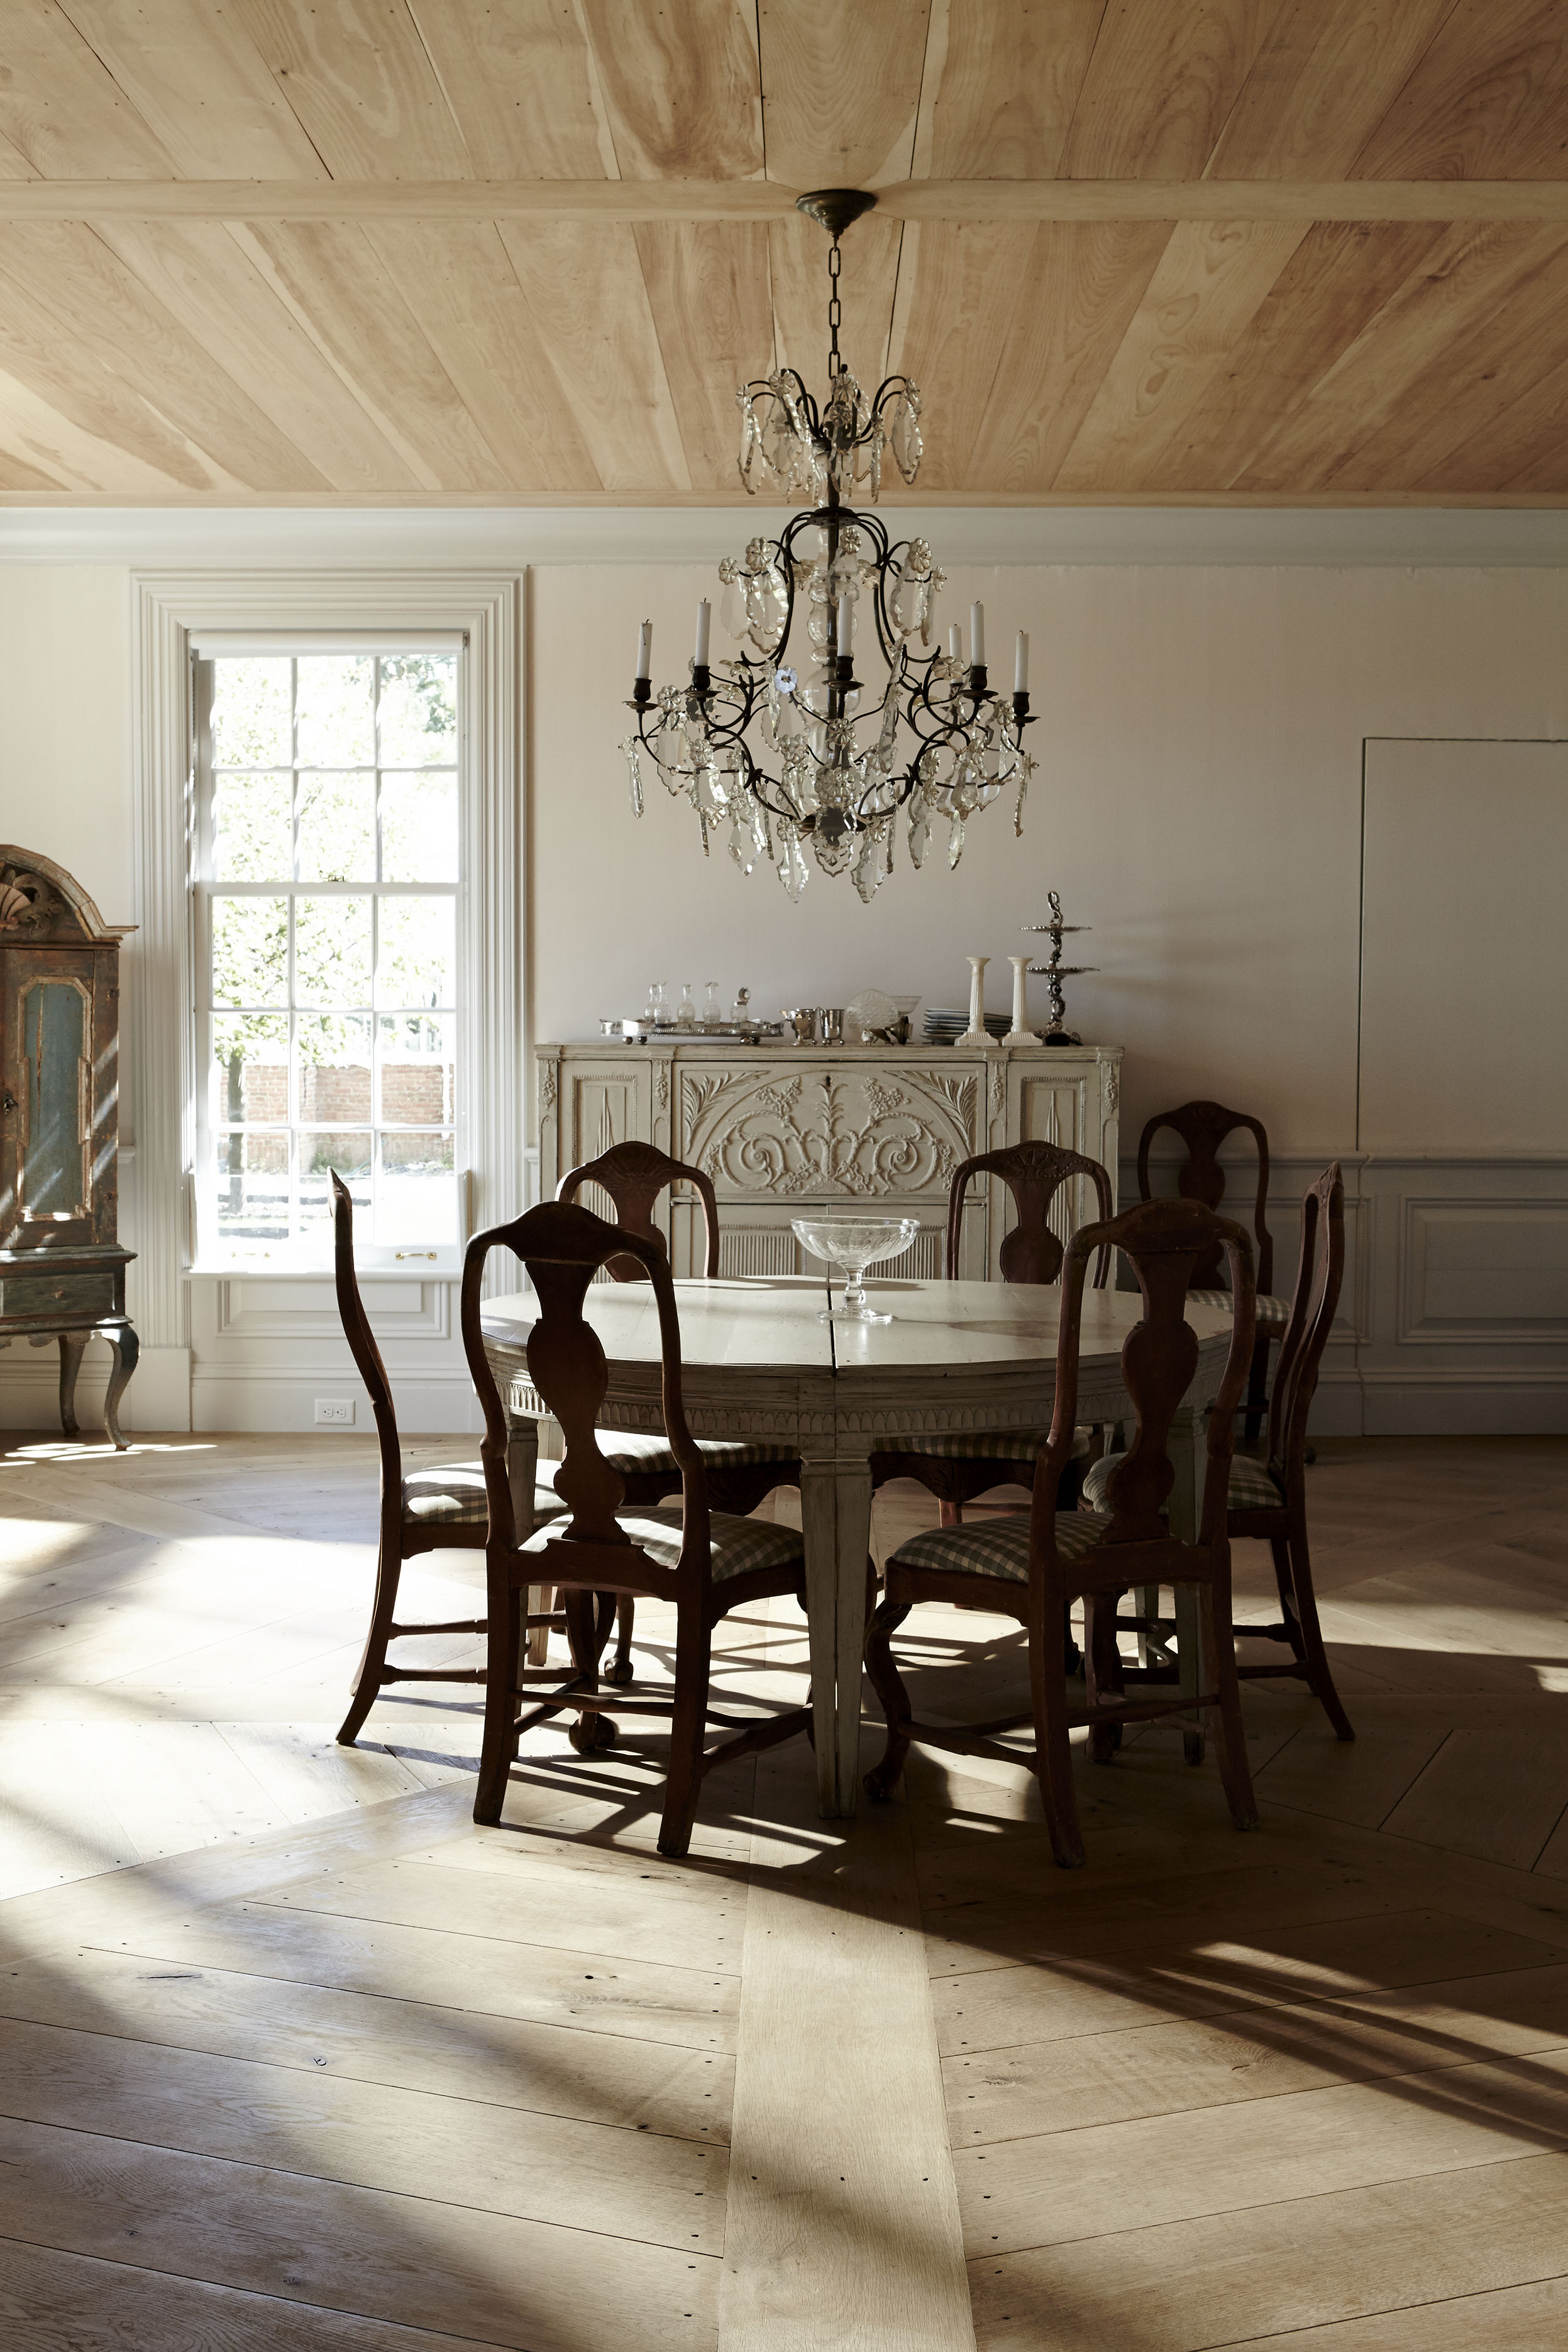 Décor Inspiration: Warm Wood at Home via The Hudson Company